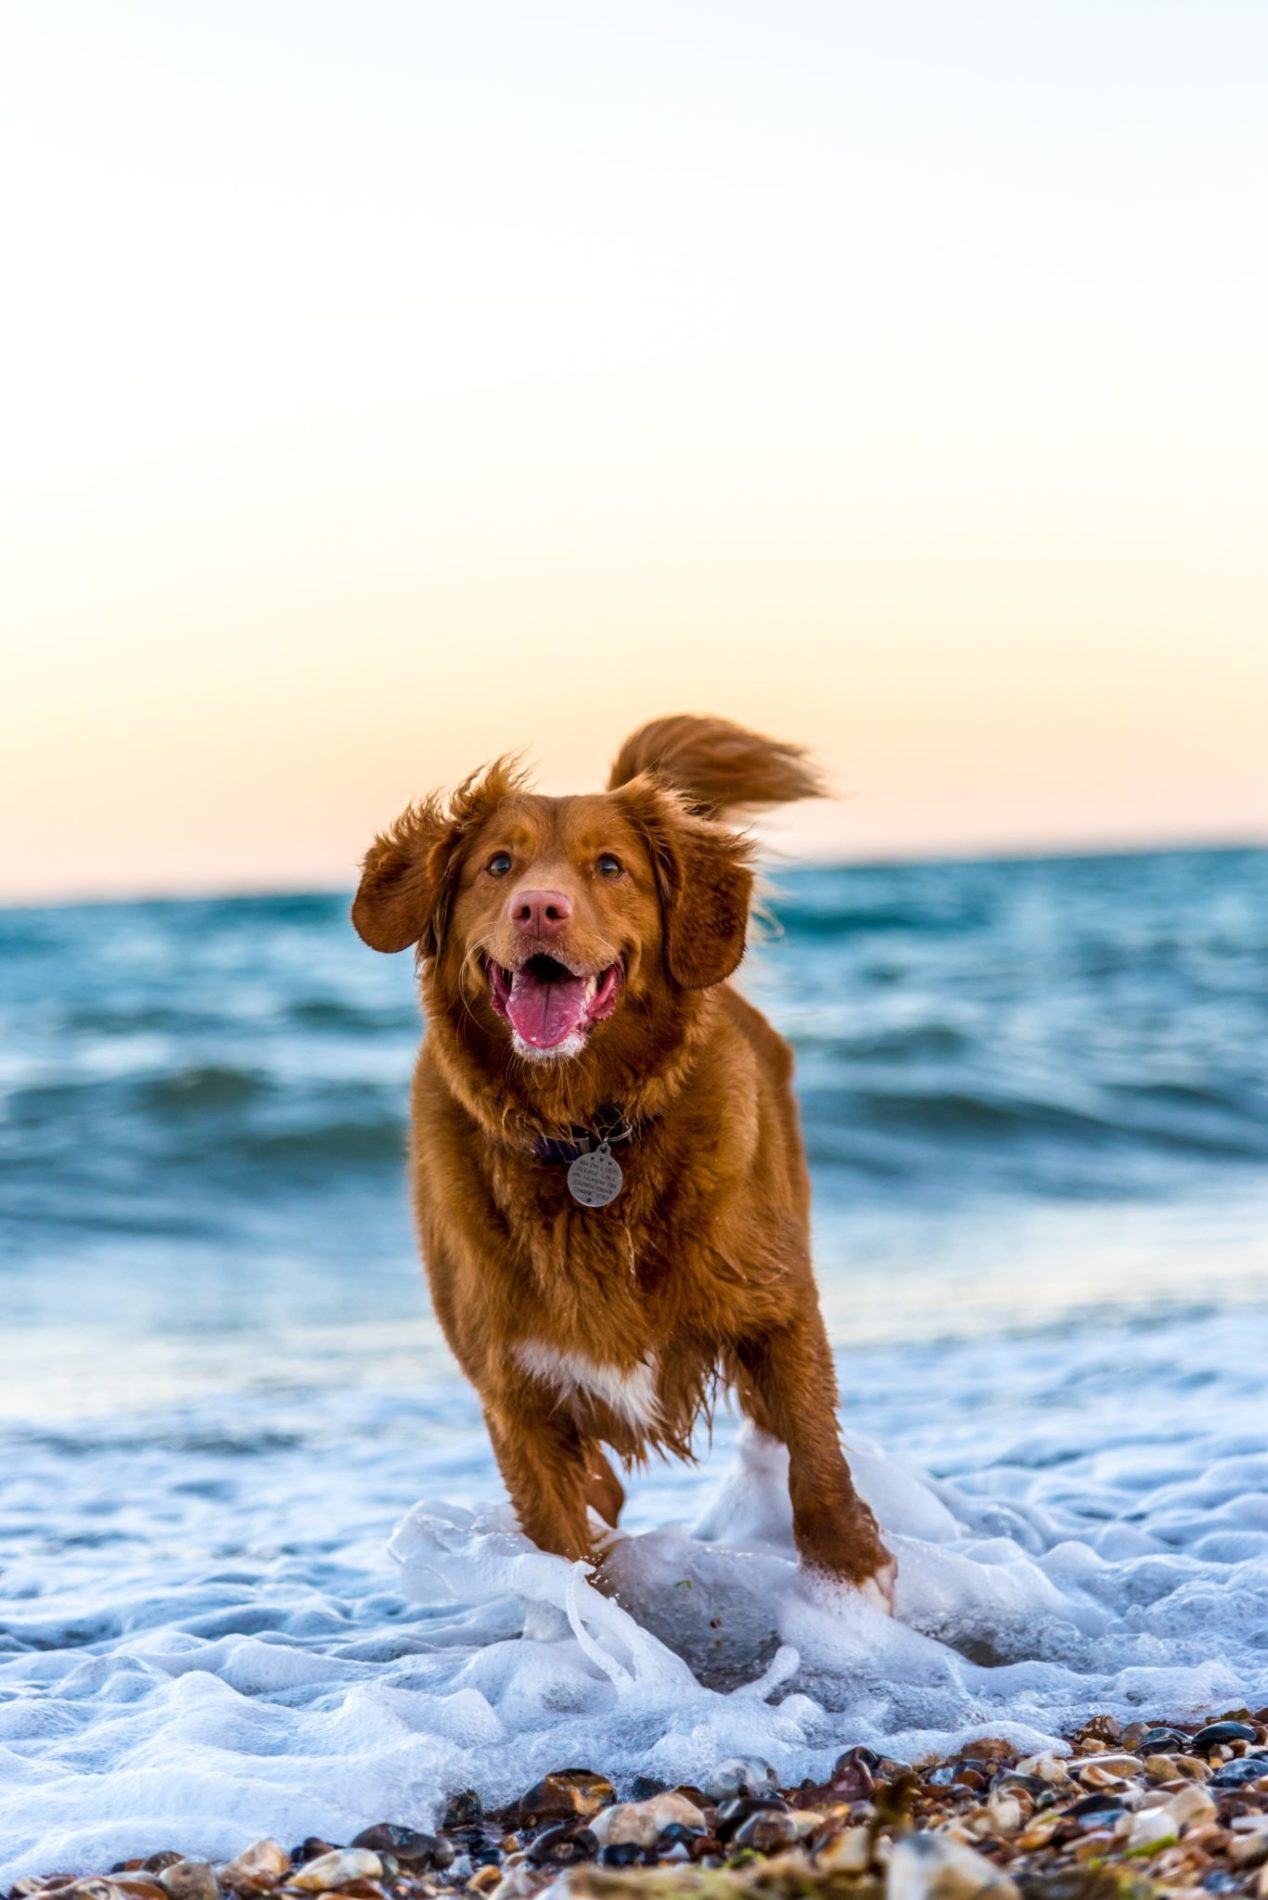 A medium-sized dog runs through foamy ocean water with a big smile.